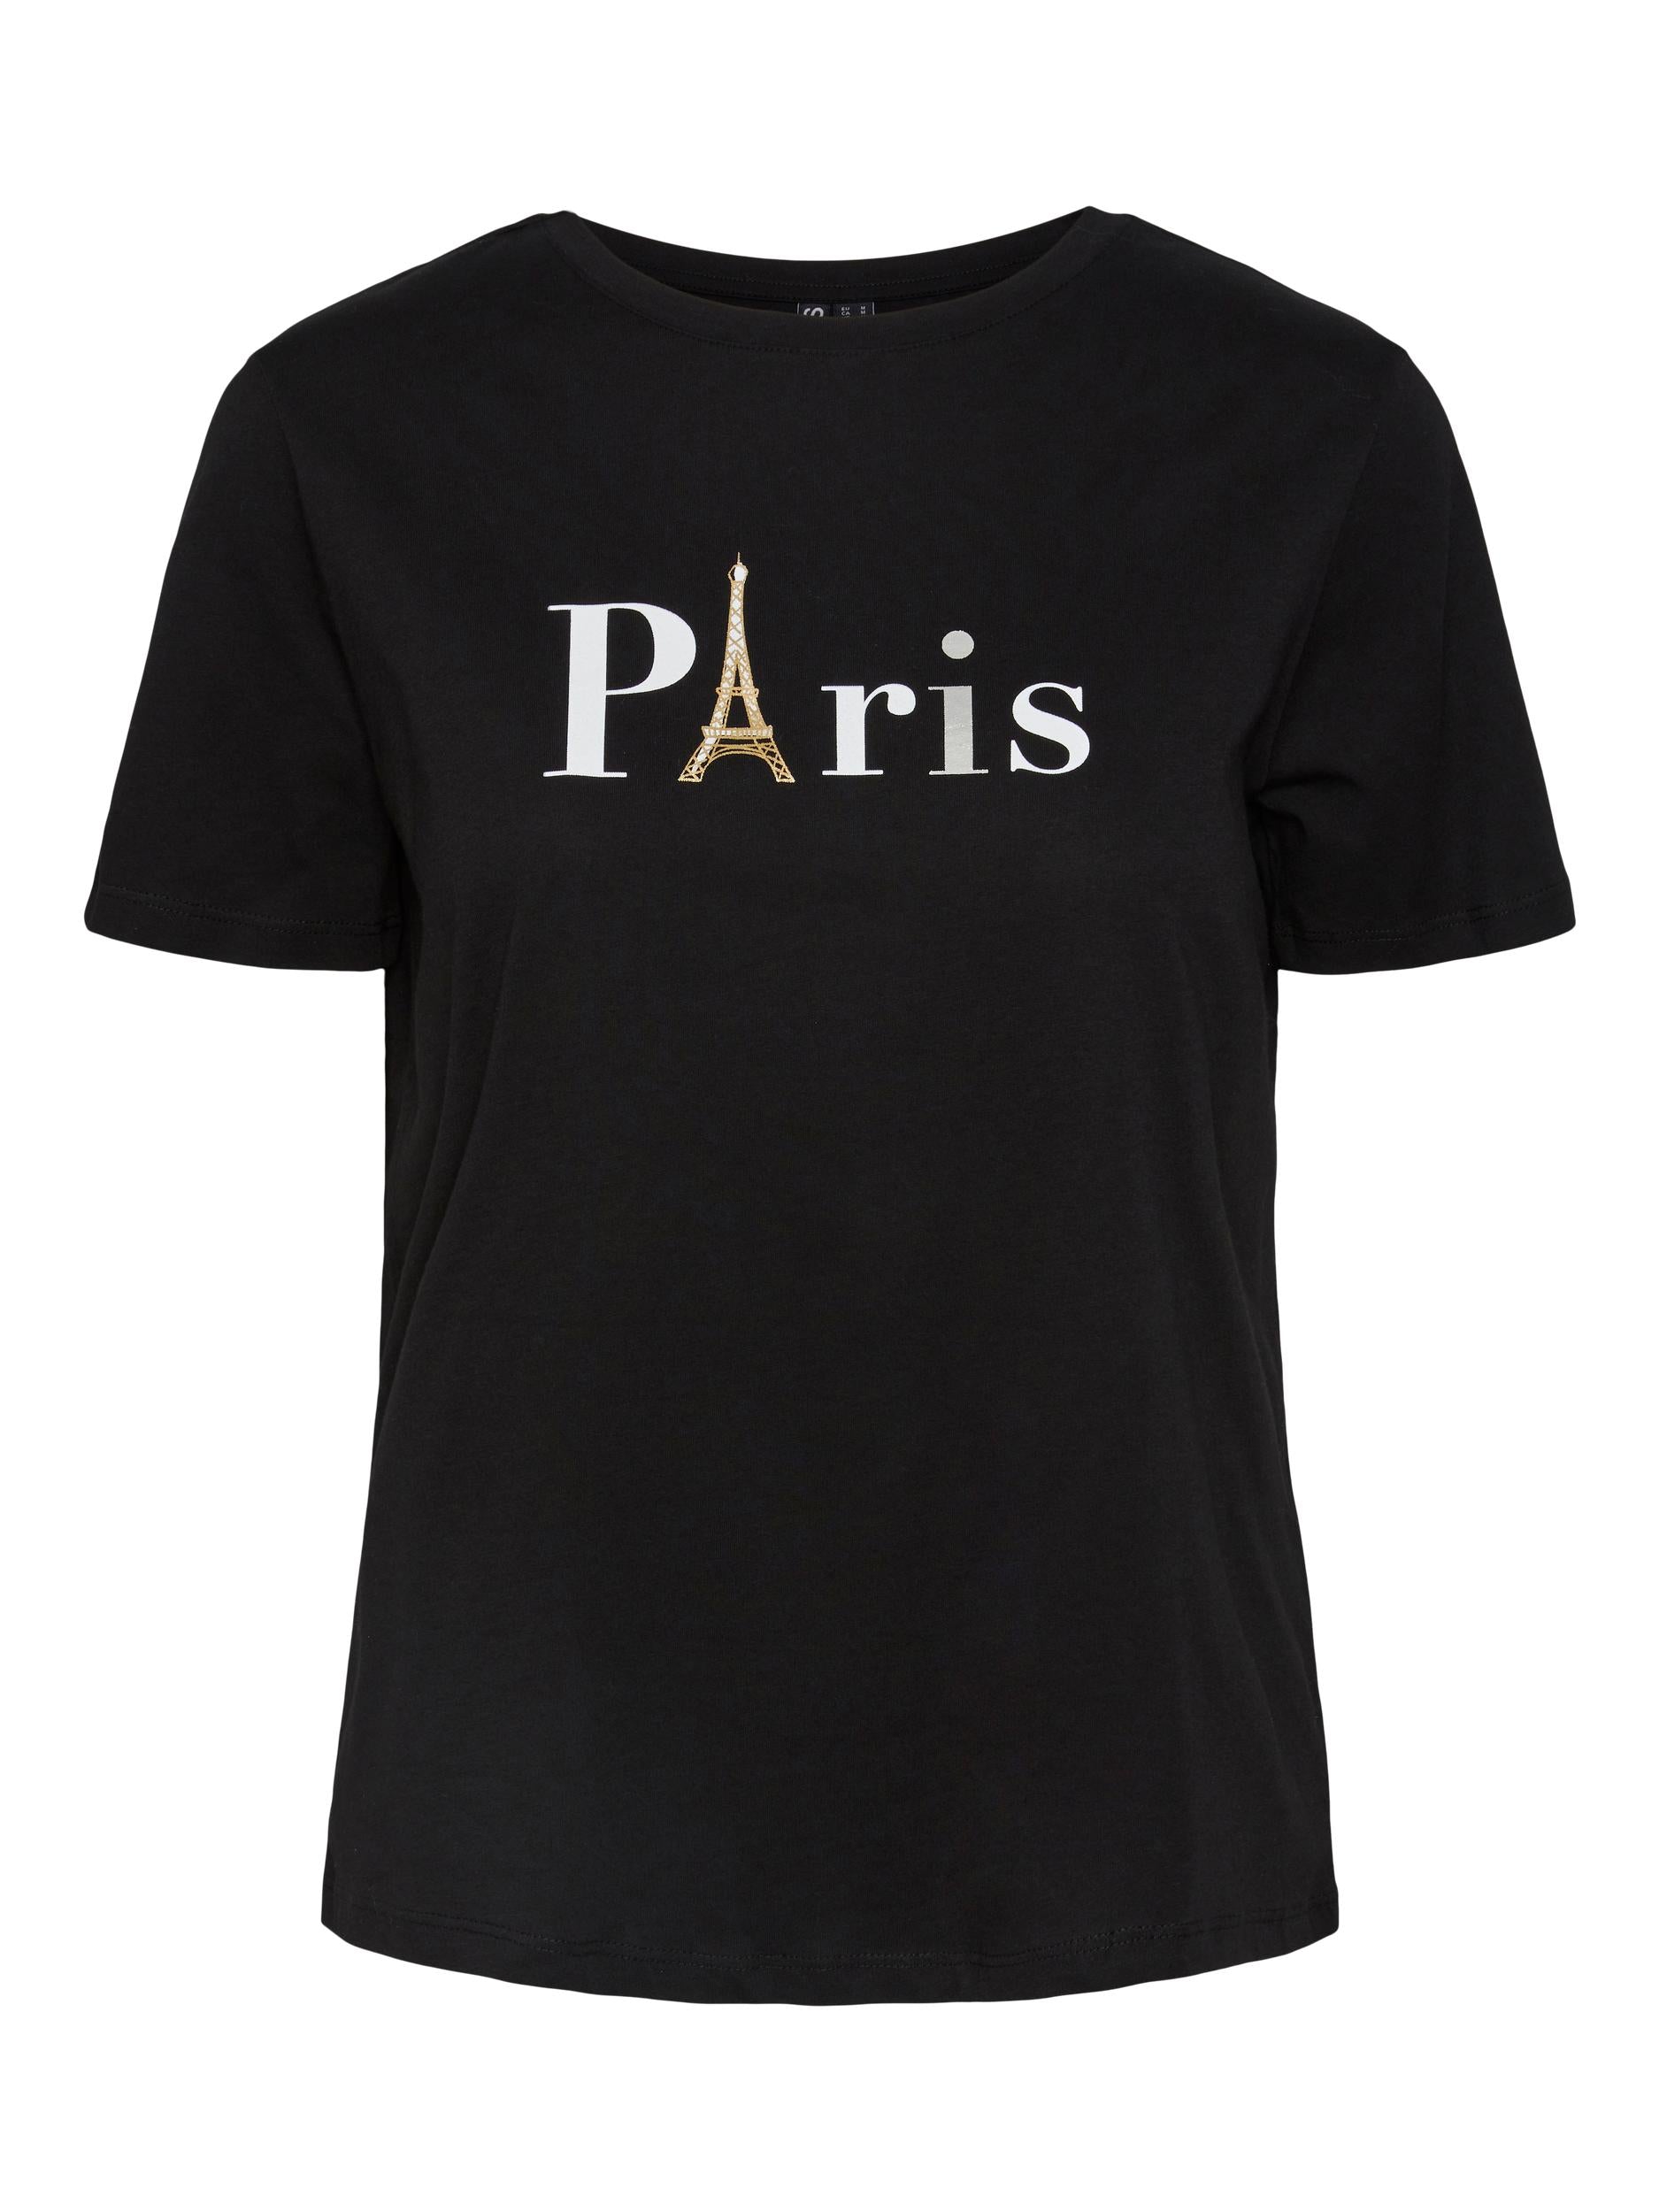 PARIS T-SHIRT (BLACK)